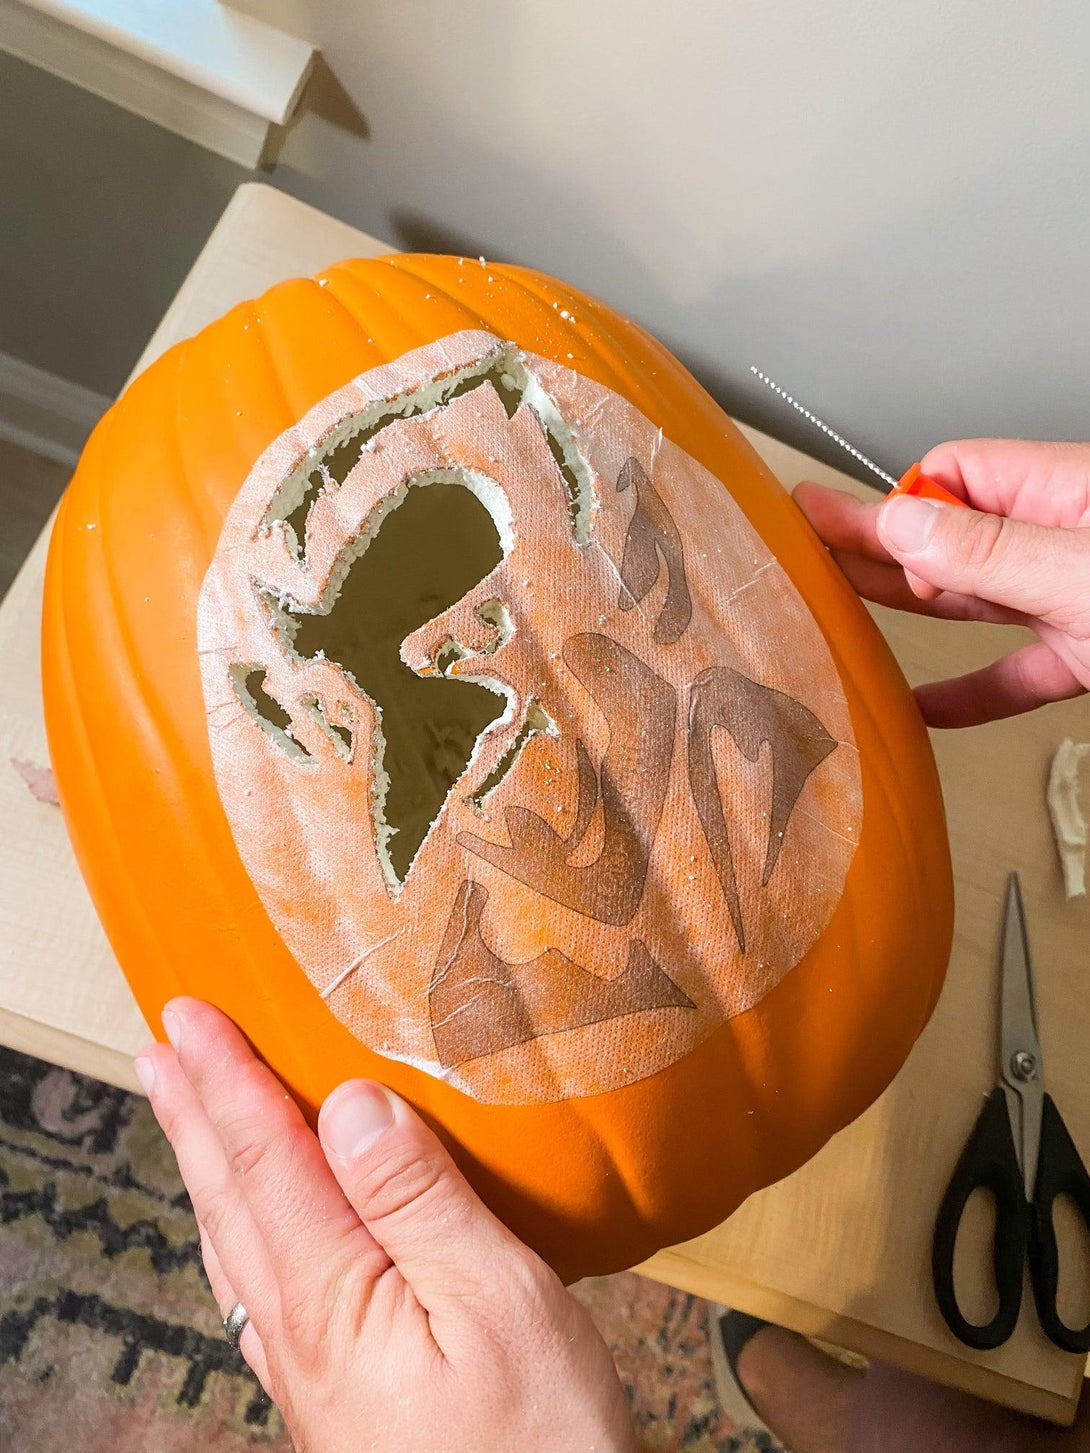 Shadowy Werewolf Pumpkin Carving Stencil - Pumpkin HQ